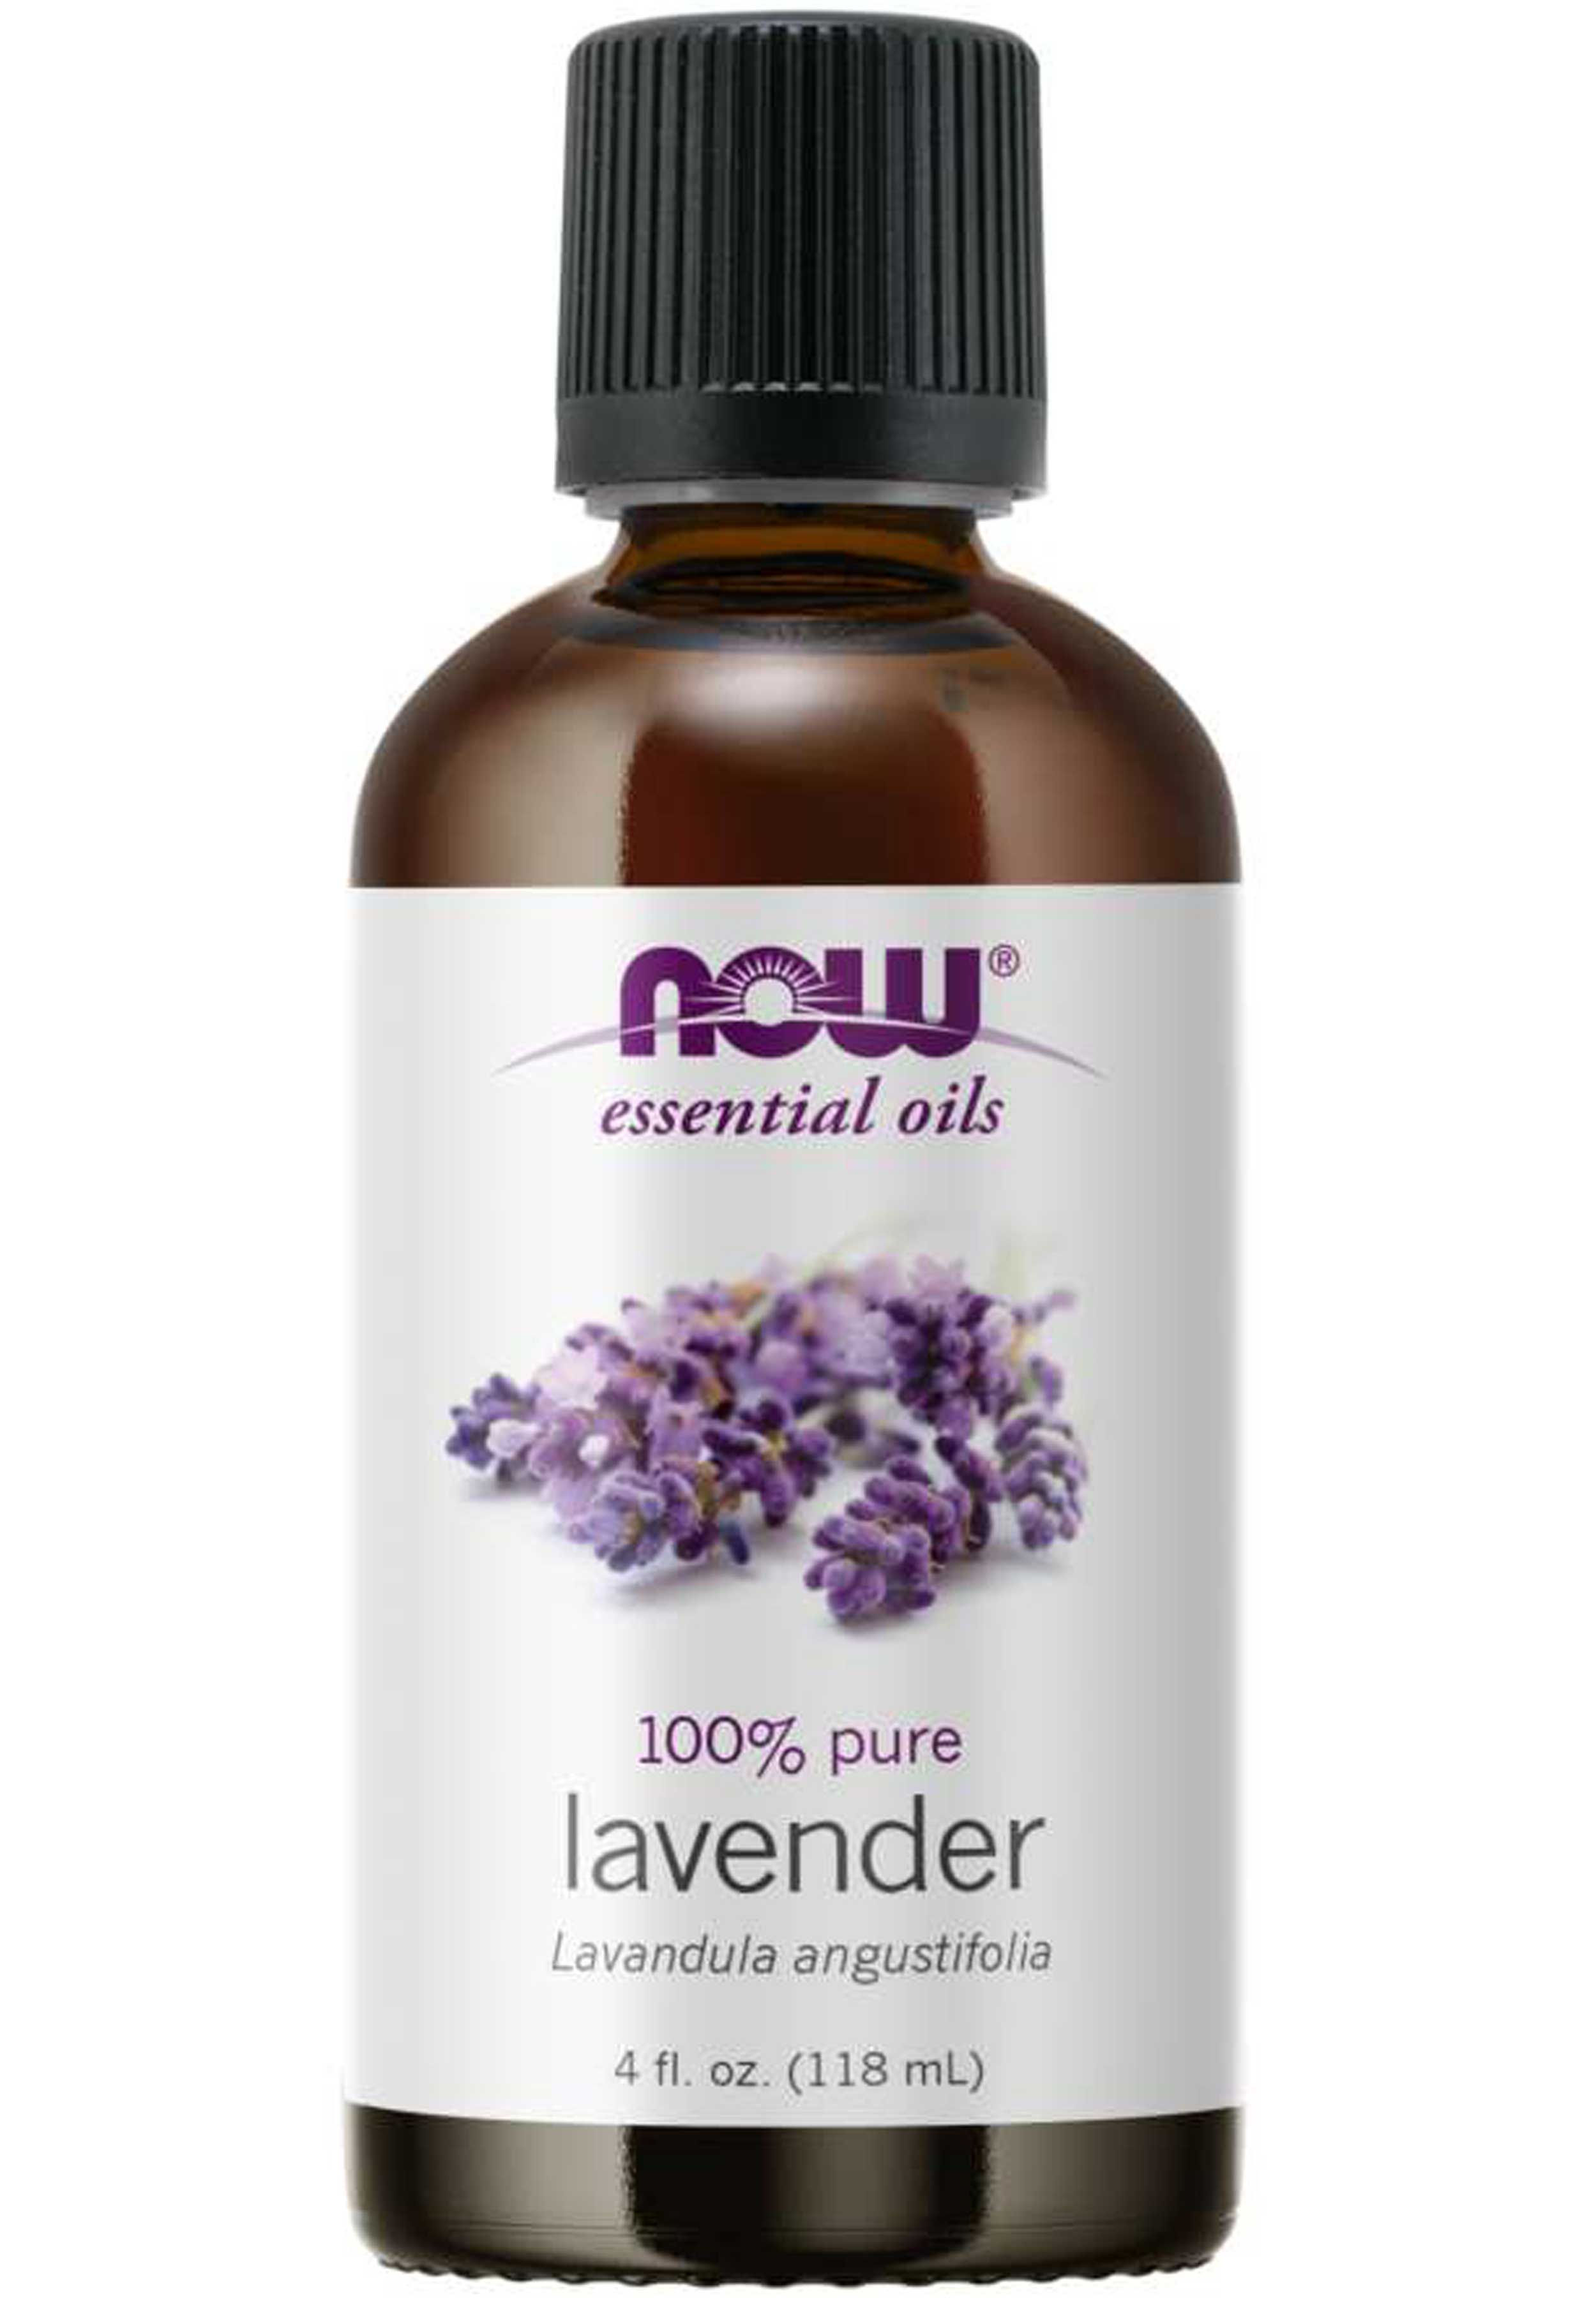 NOW Essential Oils Lavender Oil